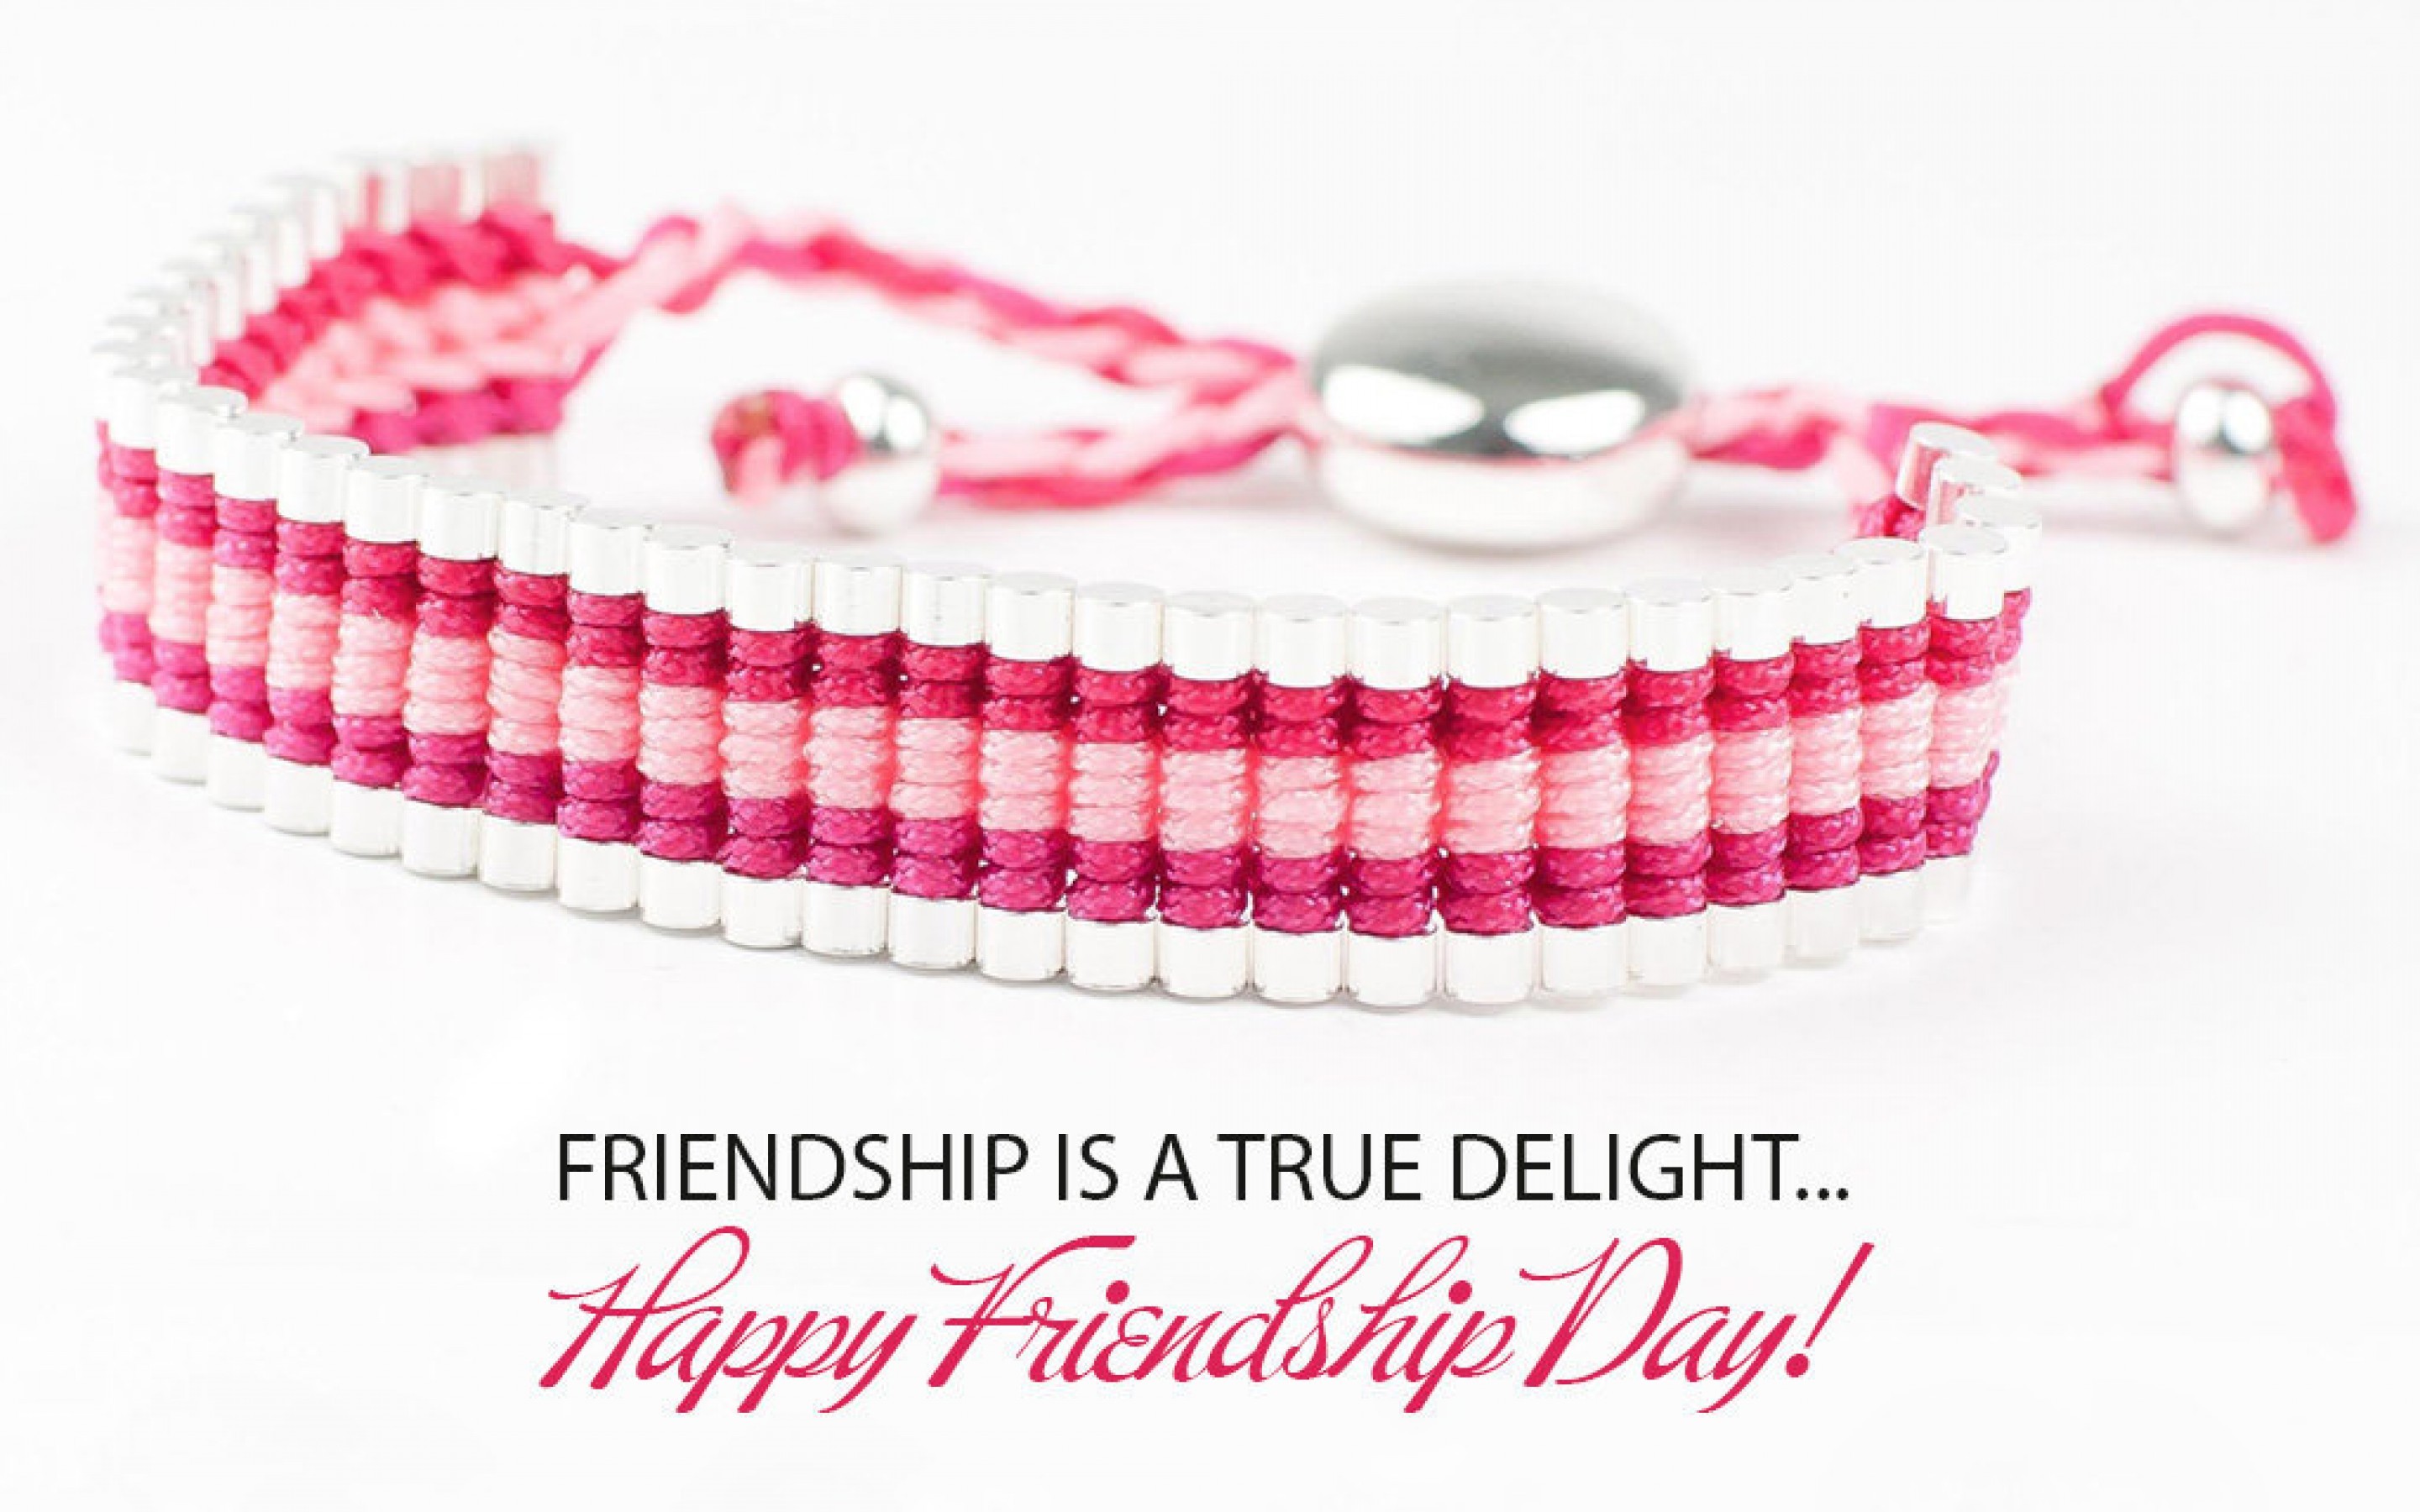 Happy Friendship Day Image - Happy Friendship Day Wallpaper Download - HD Wallpaper 